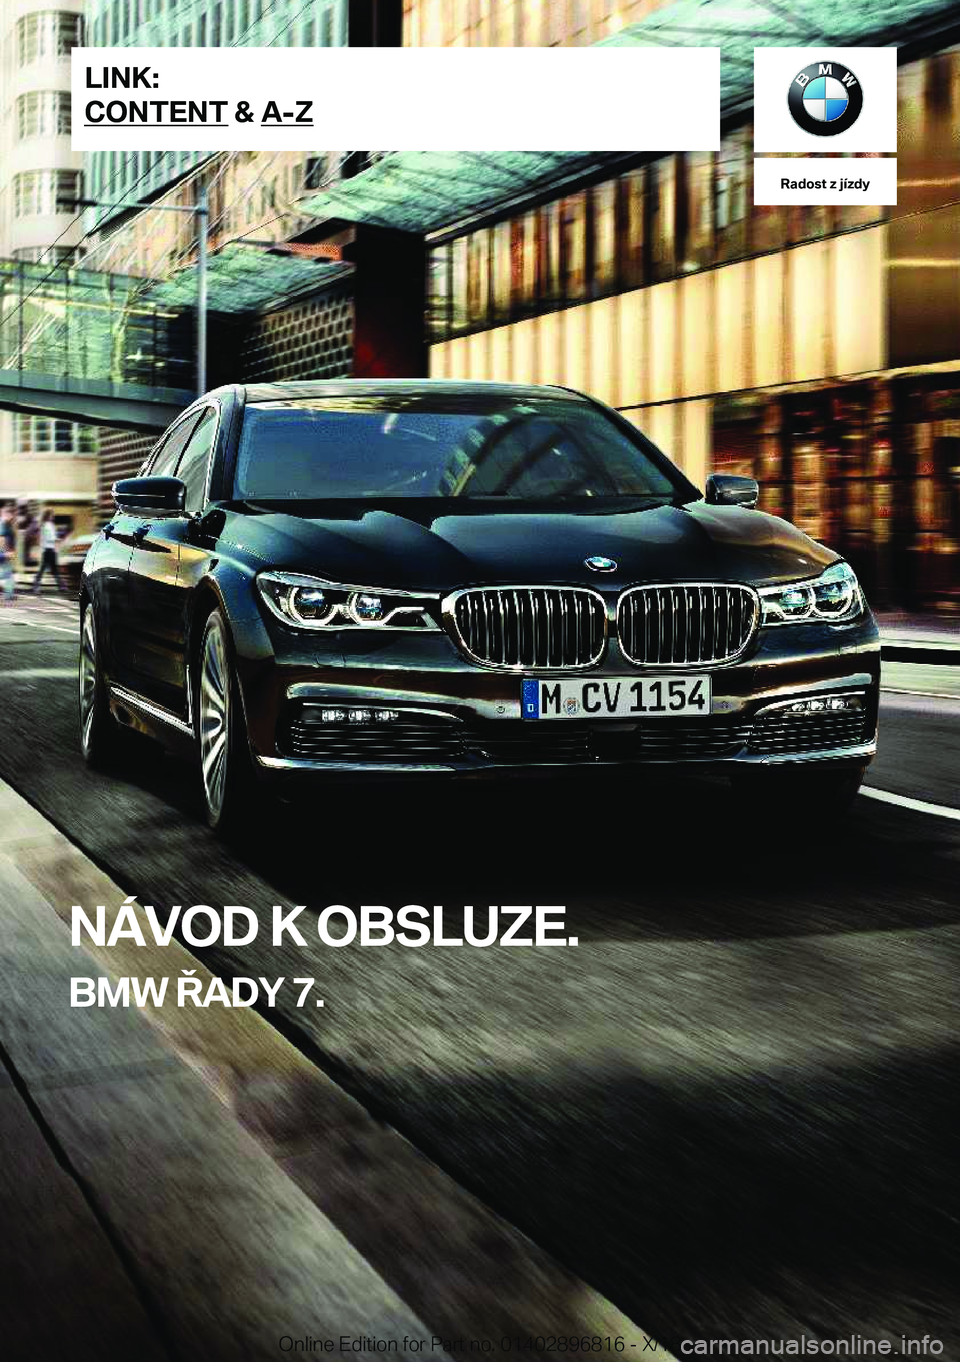 BMW 7 SERIES 2019  Návod na použití (in Czech) �R�a�d�o�s�t��z��j�